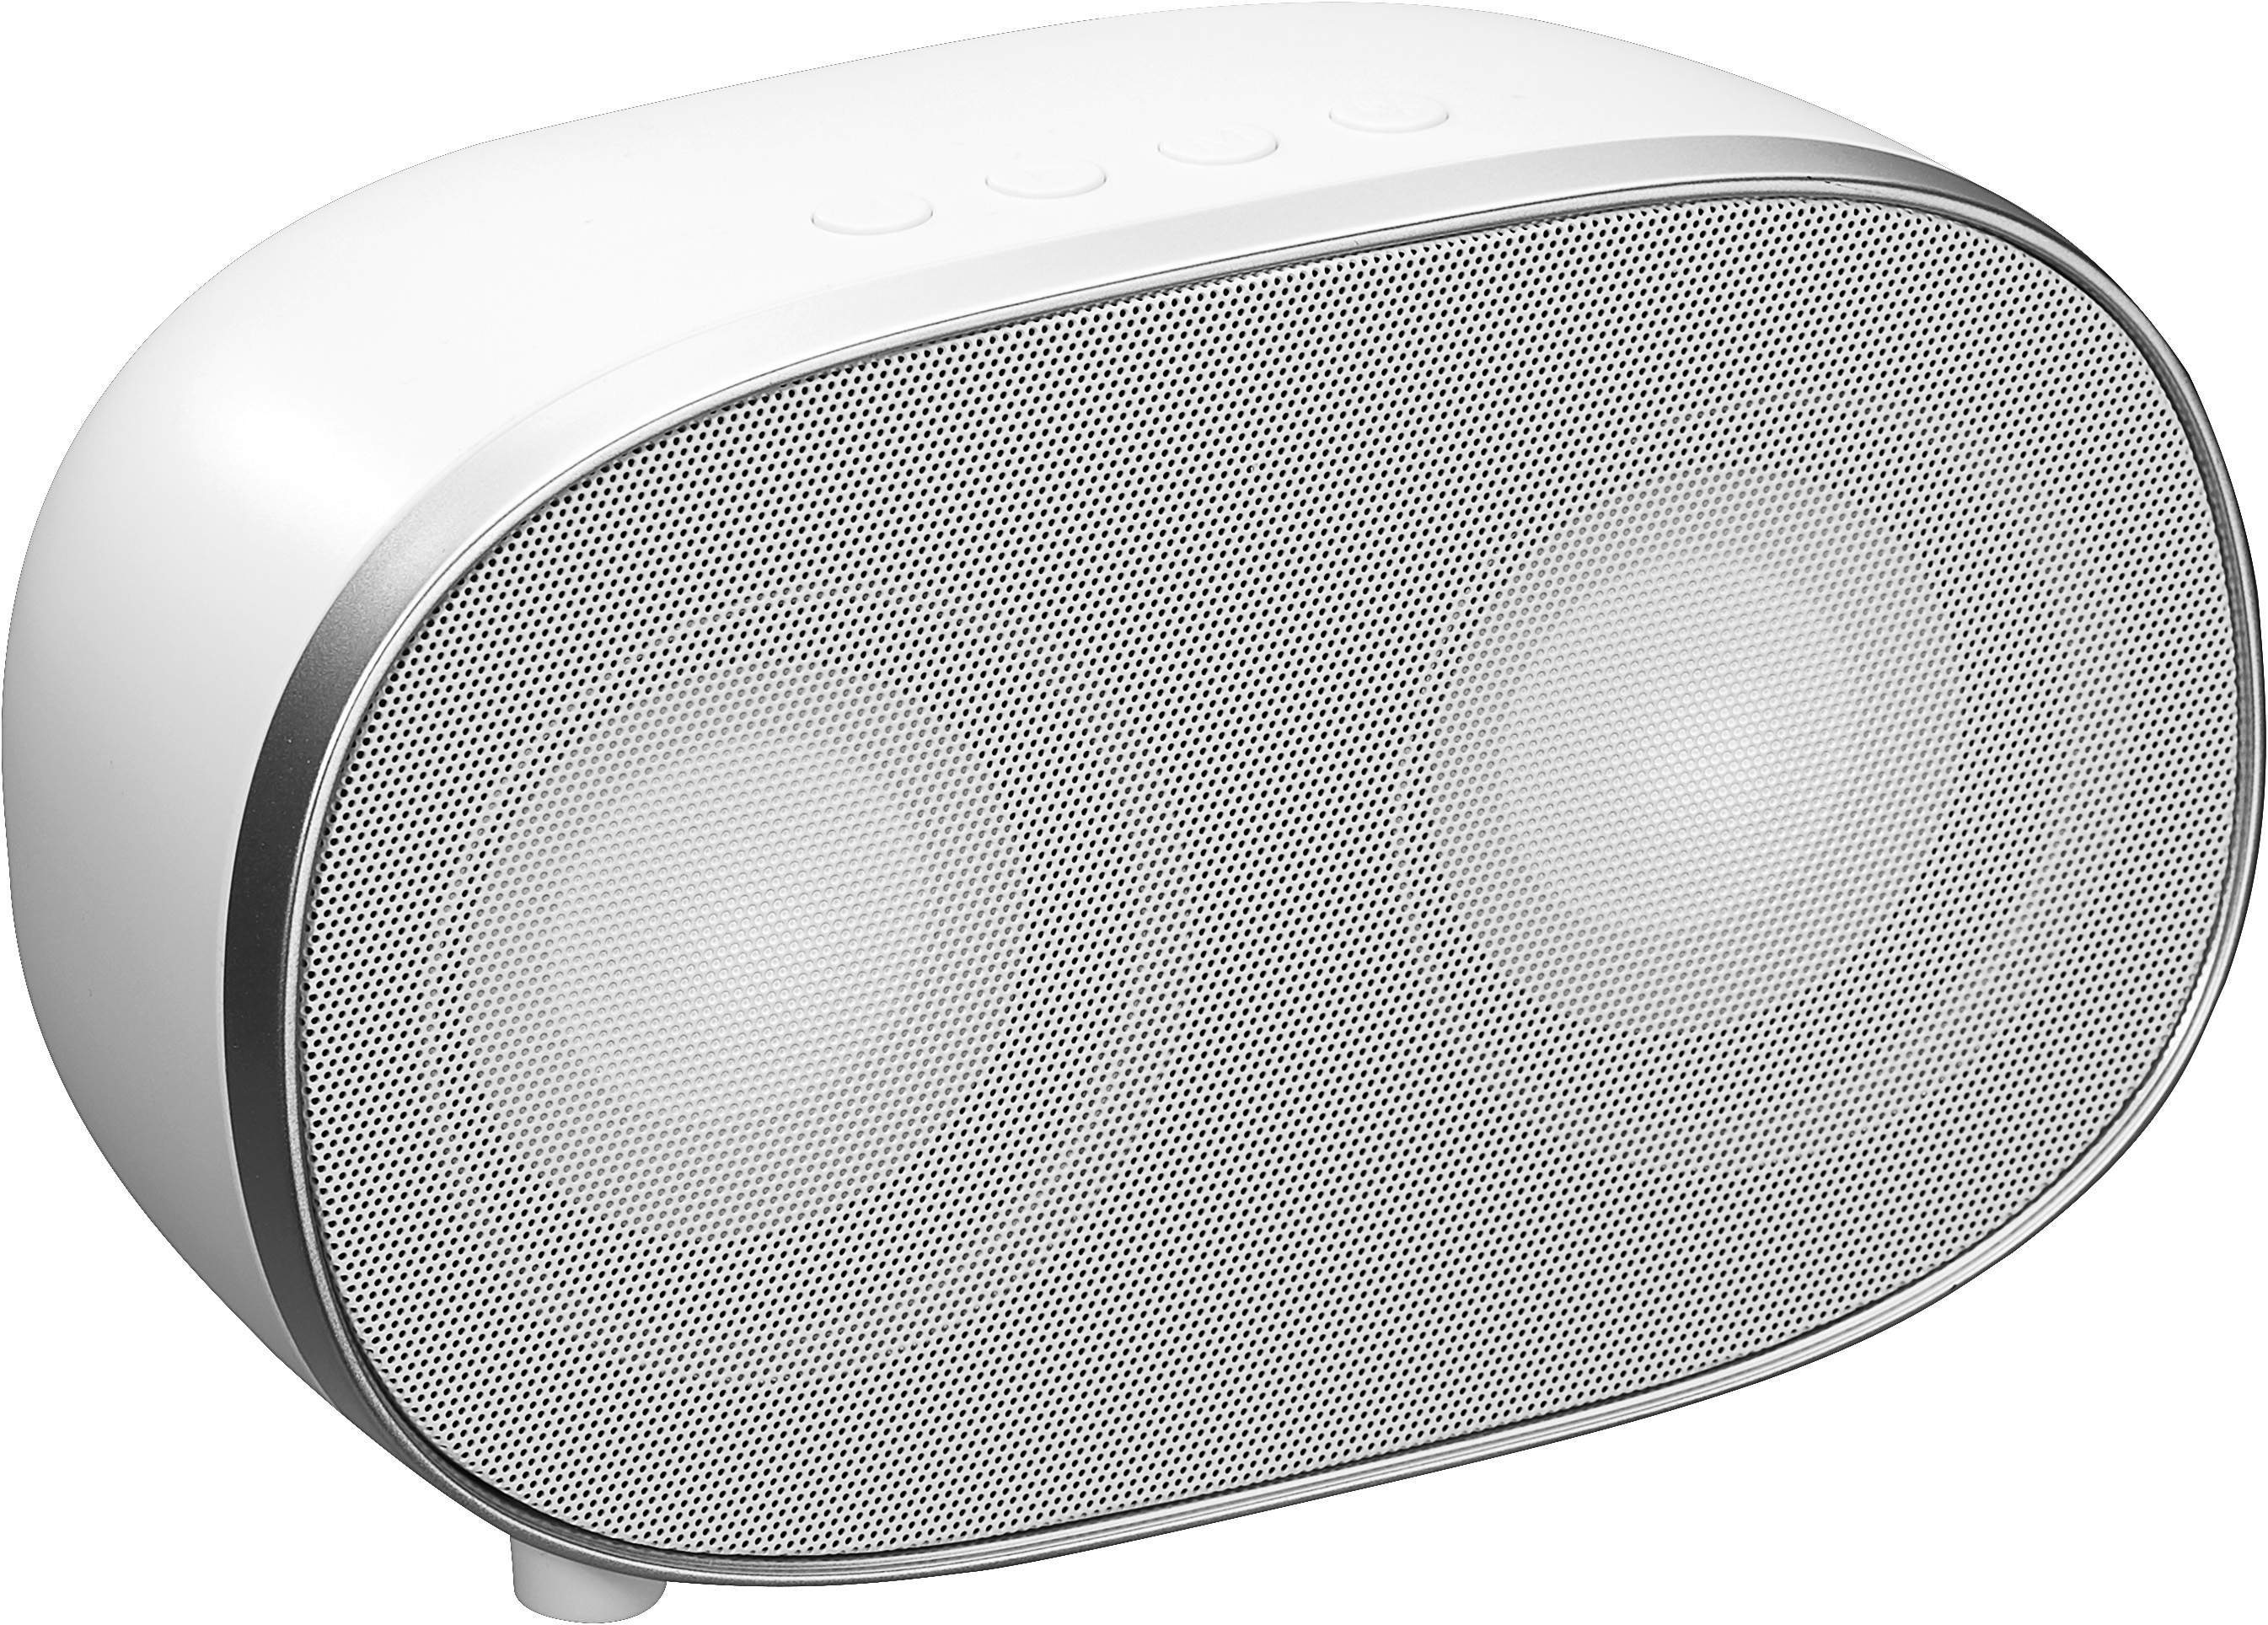 WOLLY Wireless Speaker with Illuminated membrane